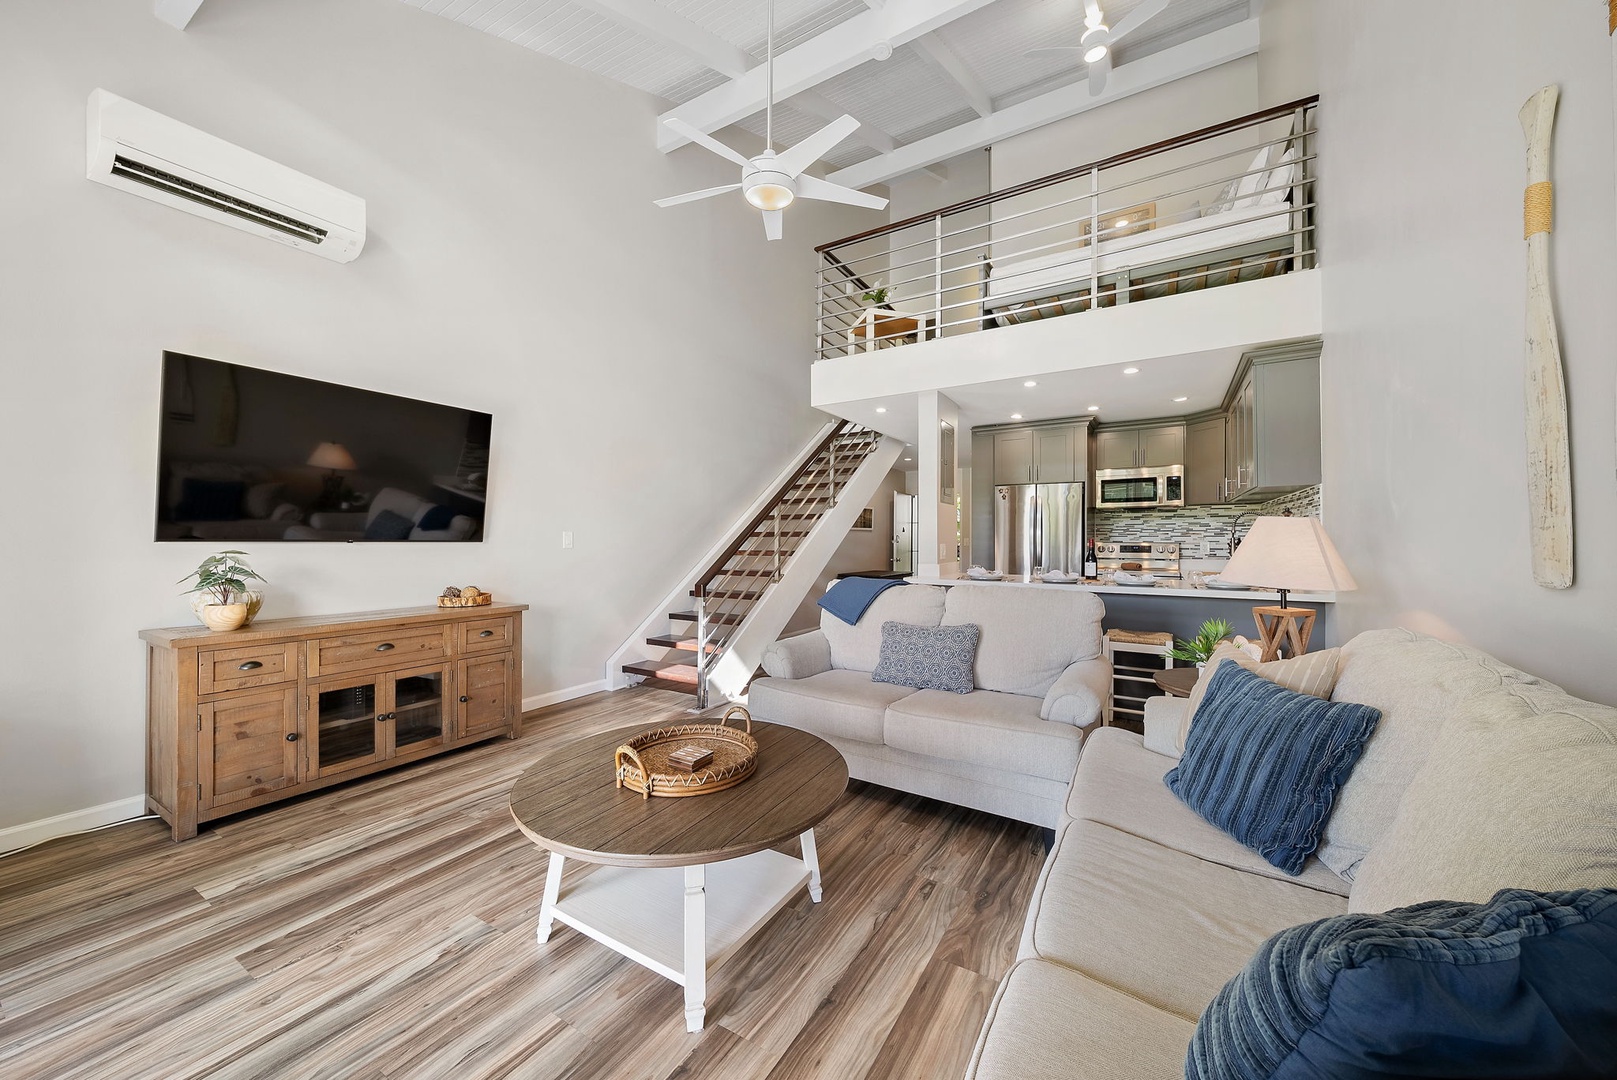 Kahuku Vacation Rentals, Kuilima Estates West #120 - Open concept floor plan between living room and kitchen.